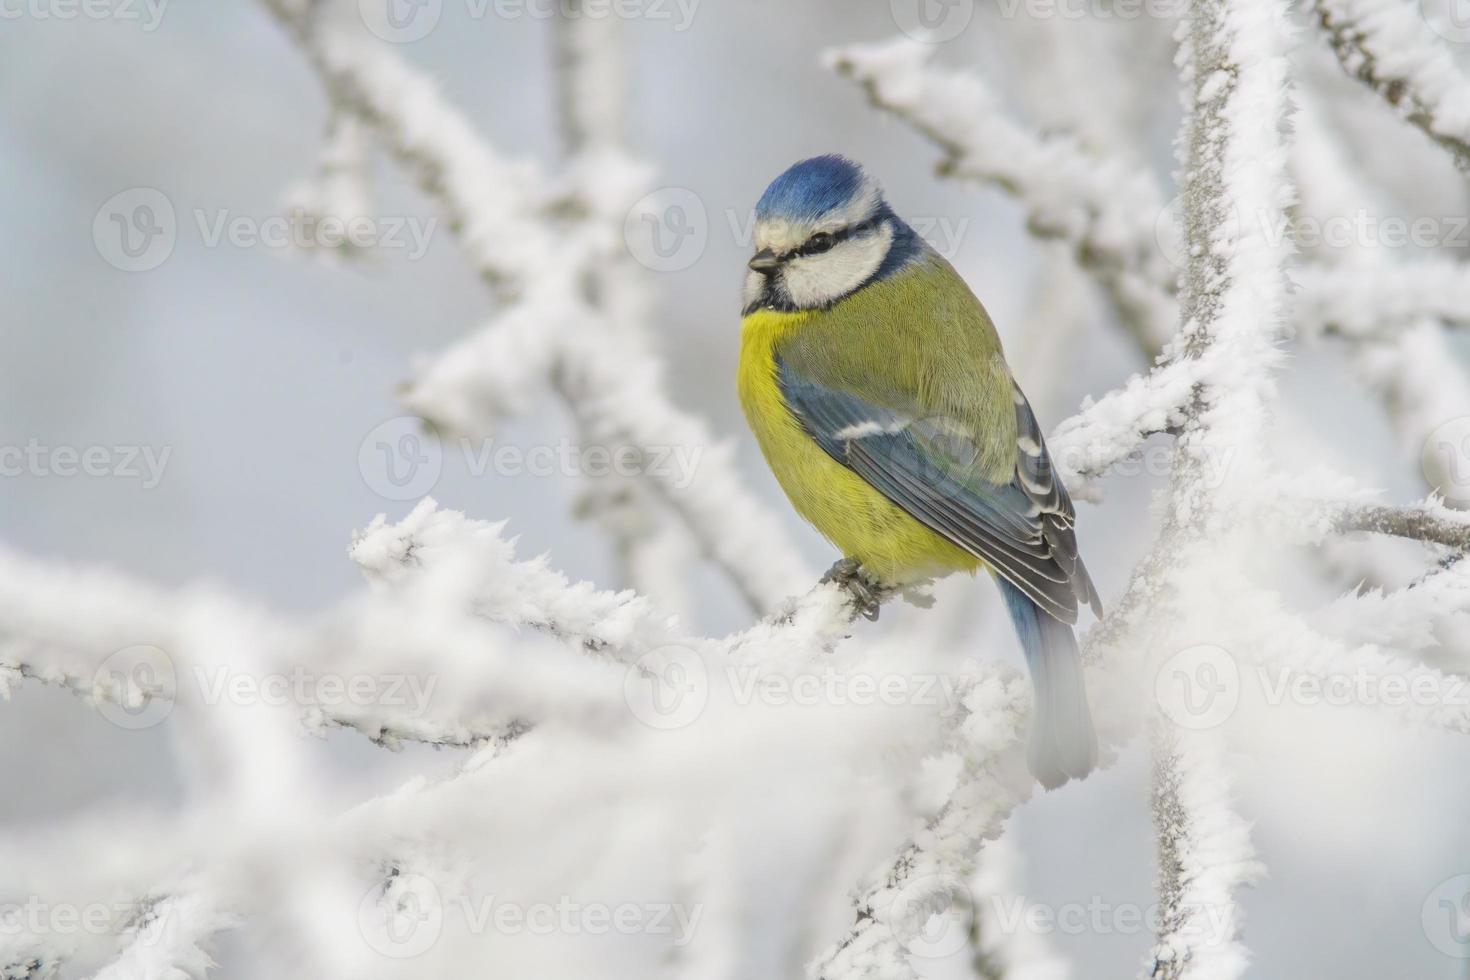 blauw tit zit Aan besneeuwd takken in verkoudheid winter tijd foto